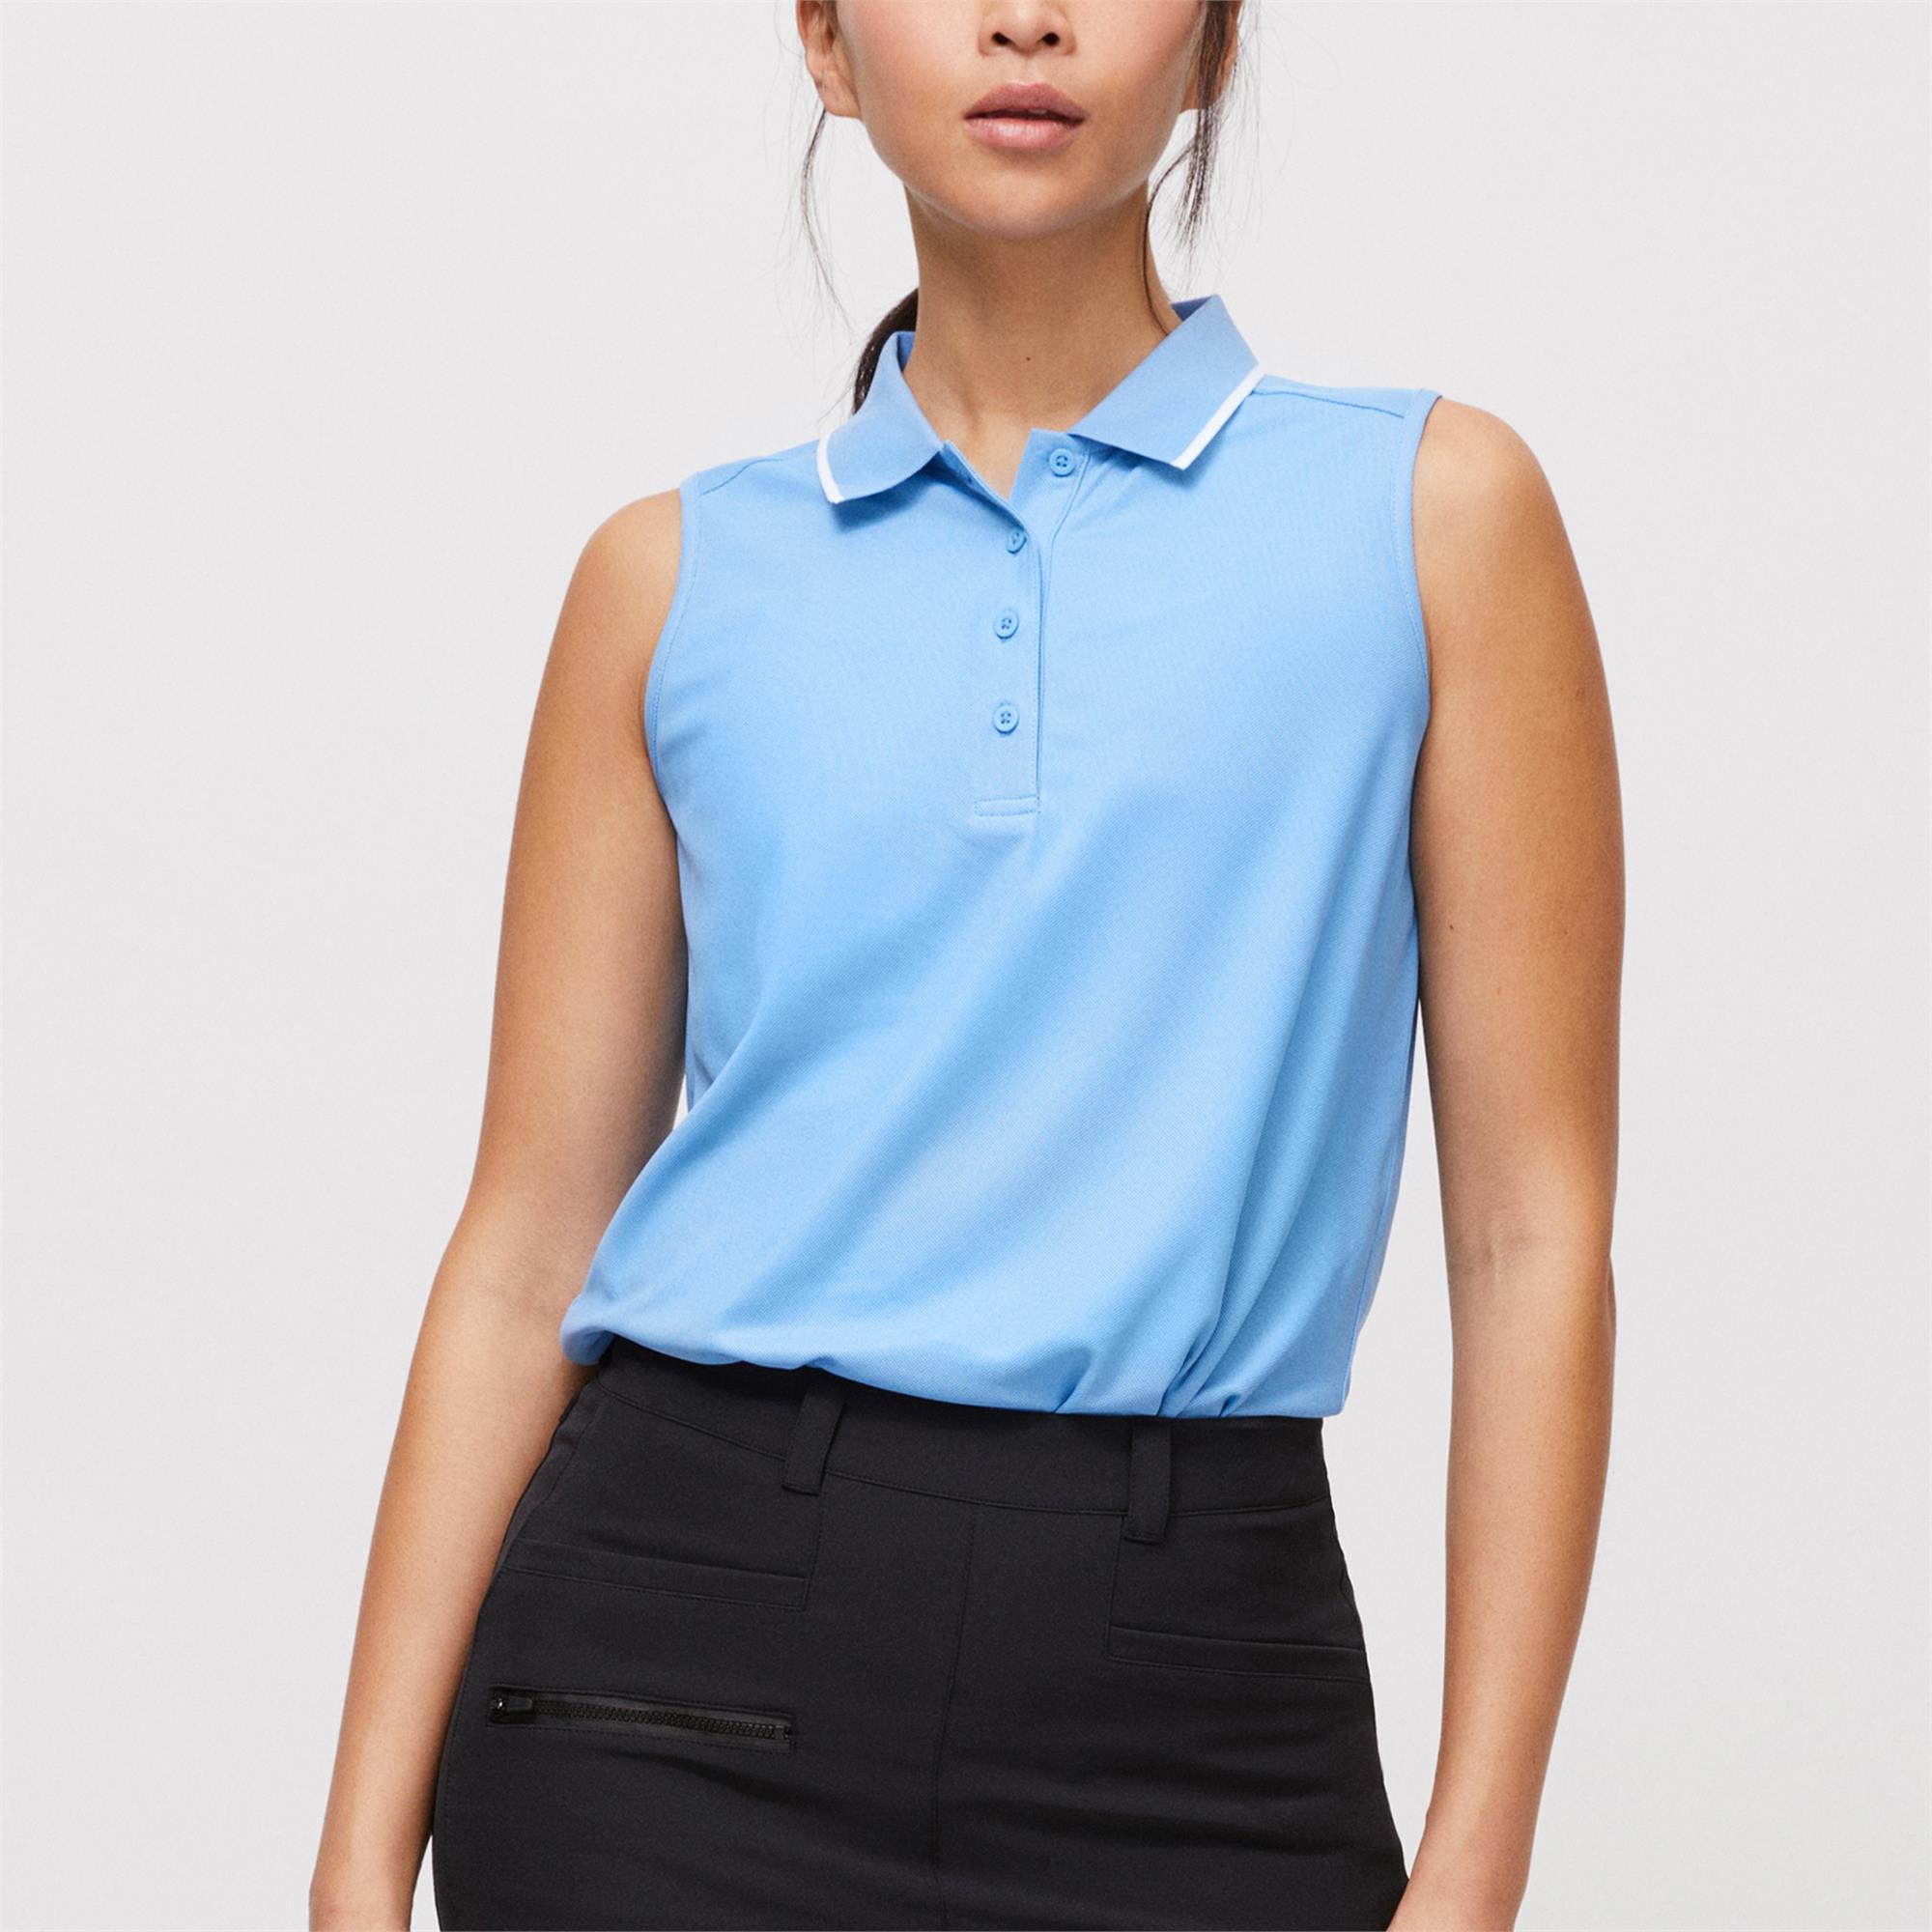 Rohnisch Miriam Sleeveless Ladies Golf Poloshirt Heavenly Blue